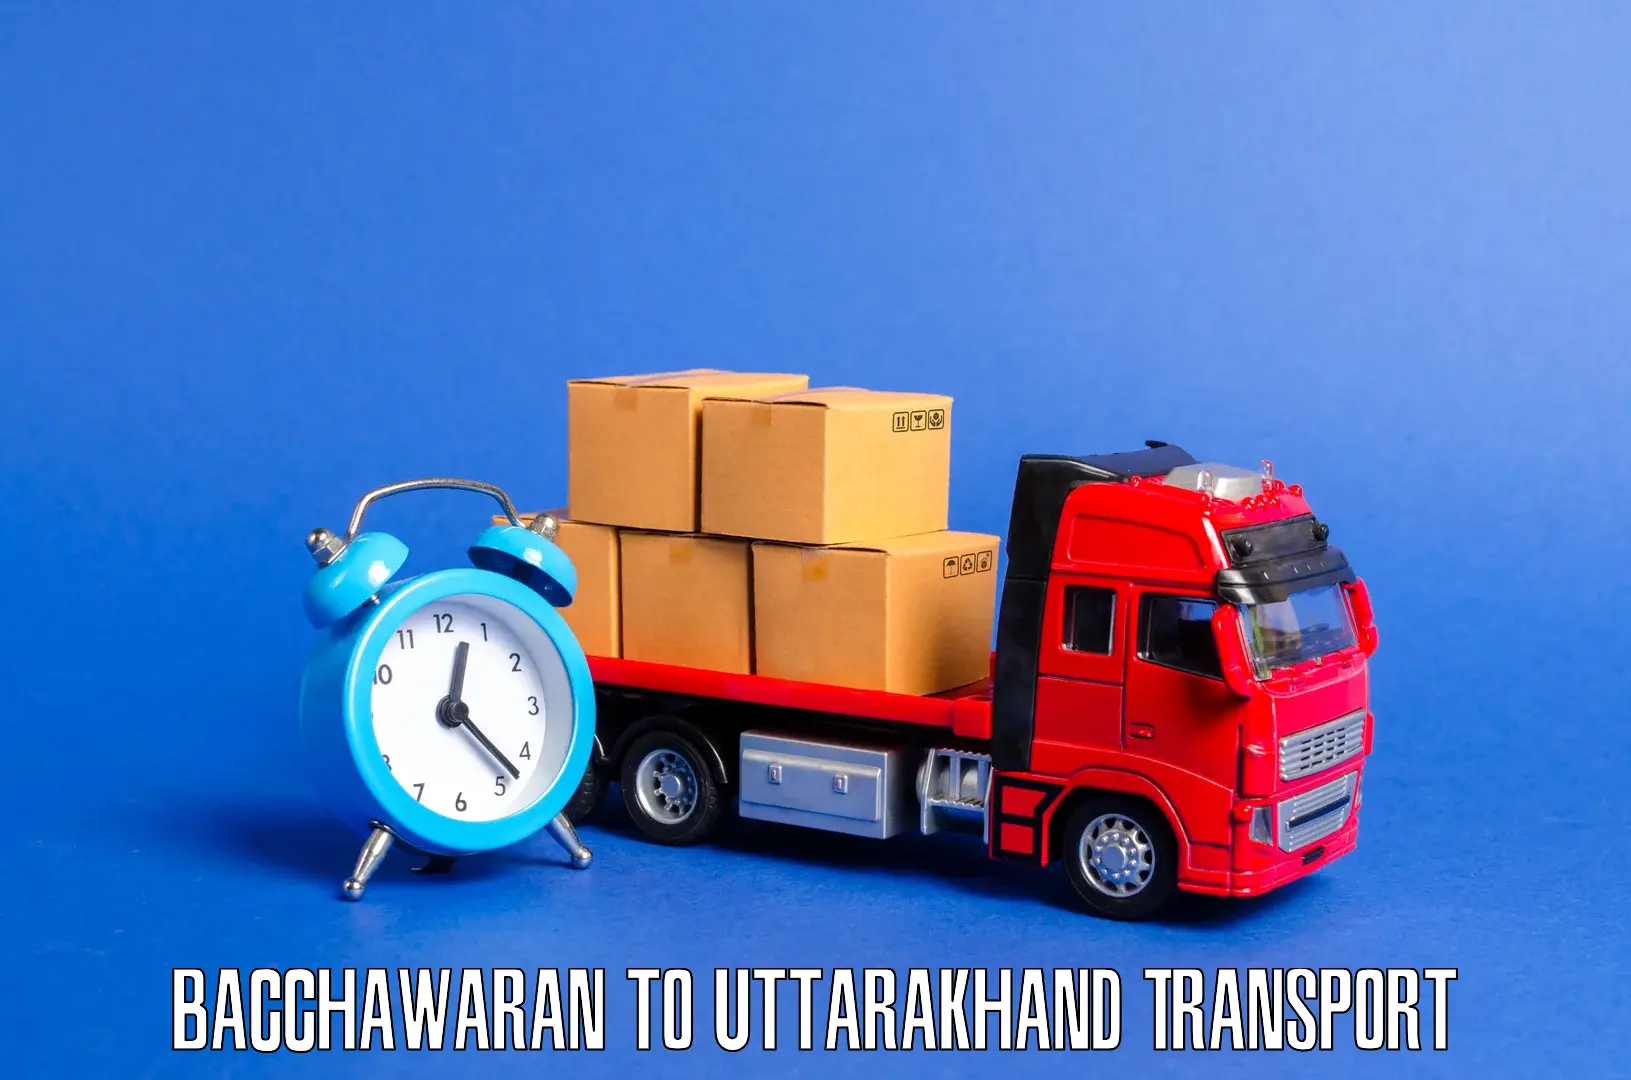 Air cargo transport services in Bacchawaran to Karnaprayag